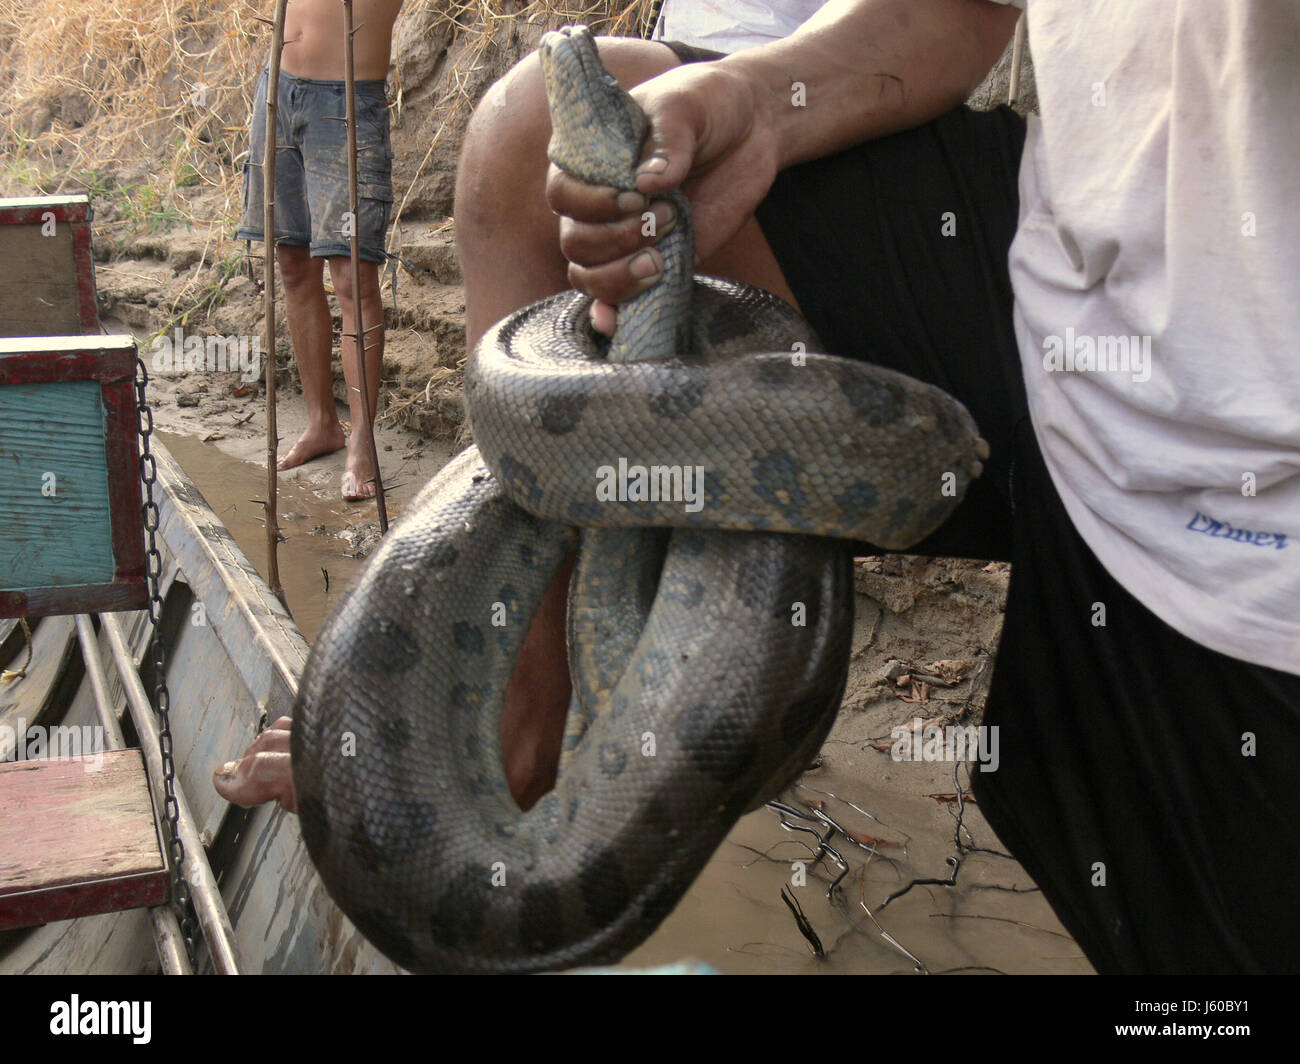 animal snake venezuela river water hand travel savannah america adventure hold Stock Photo